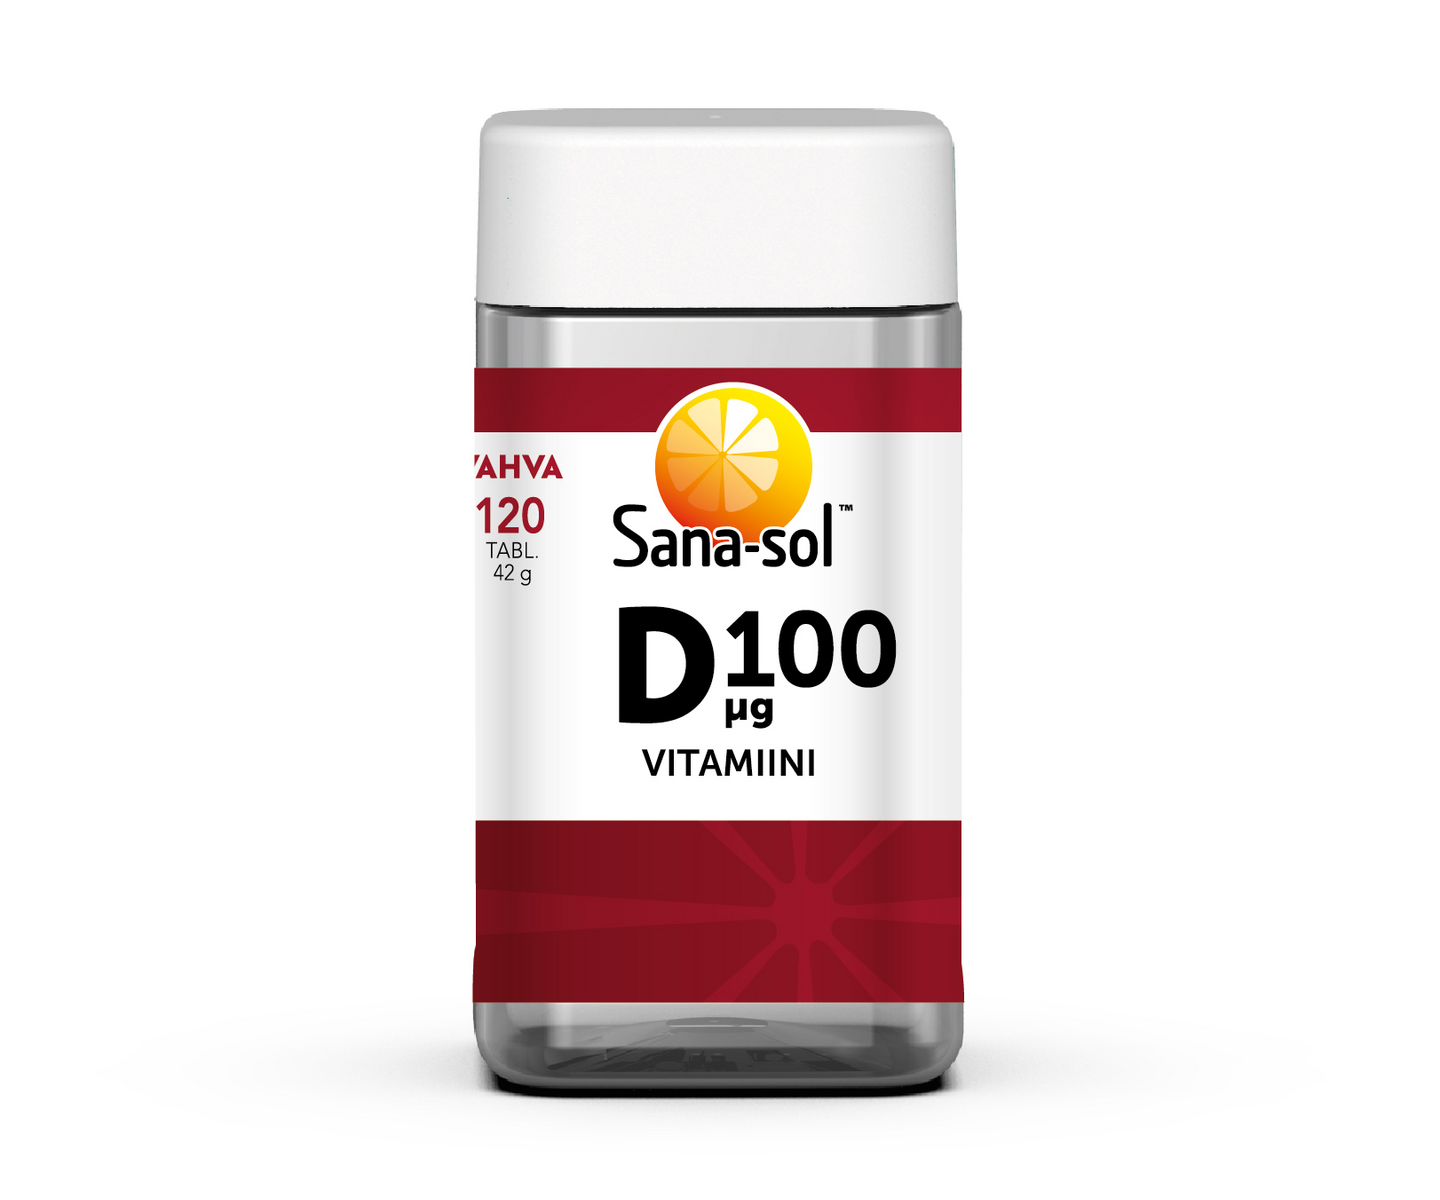 Sana-sol D-vitamiini 100µg vahva 120tabl/42g